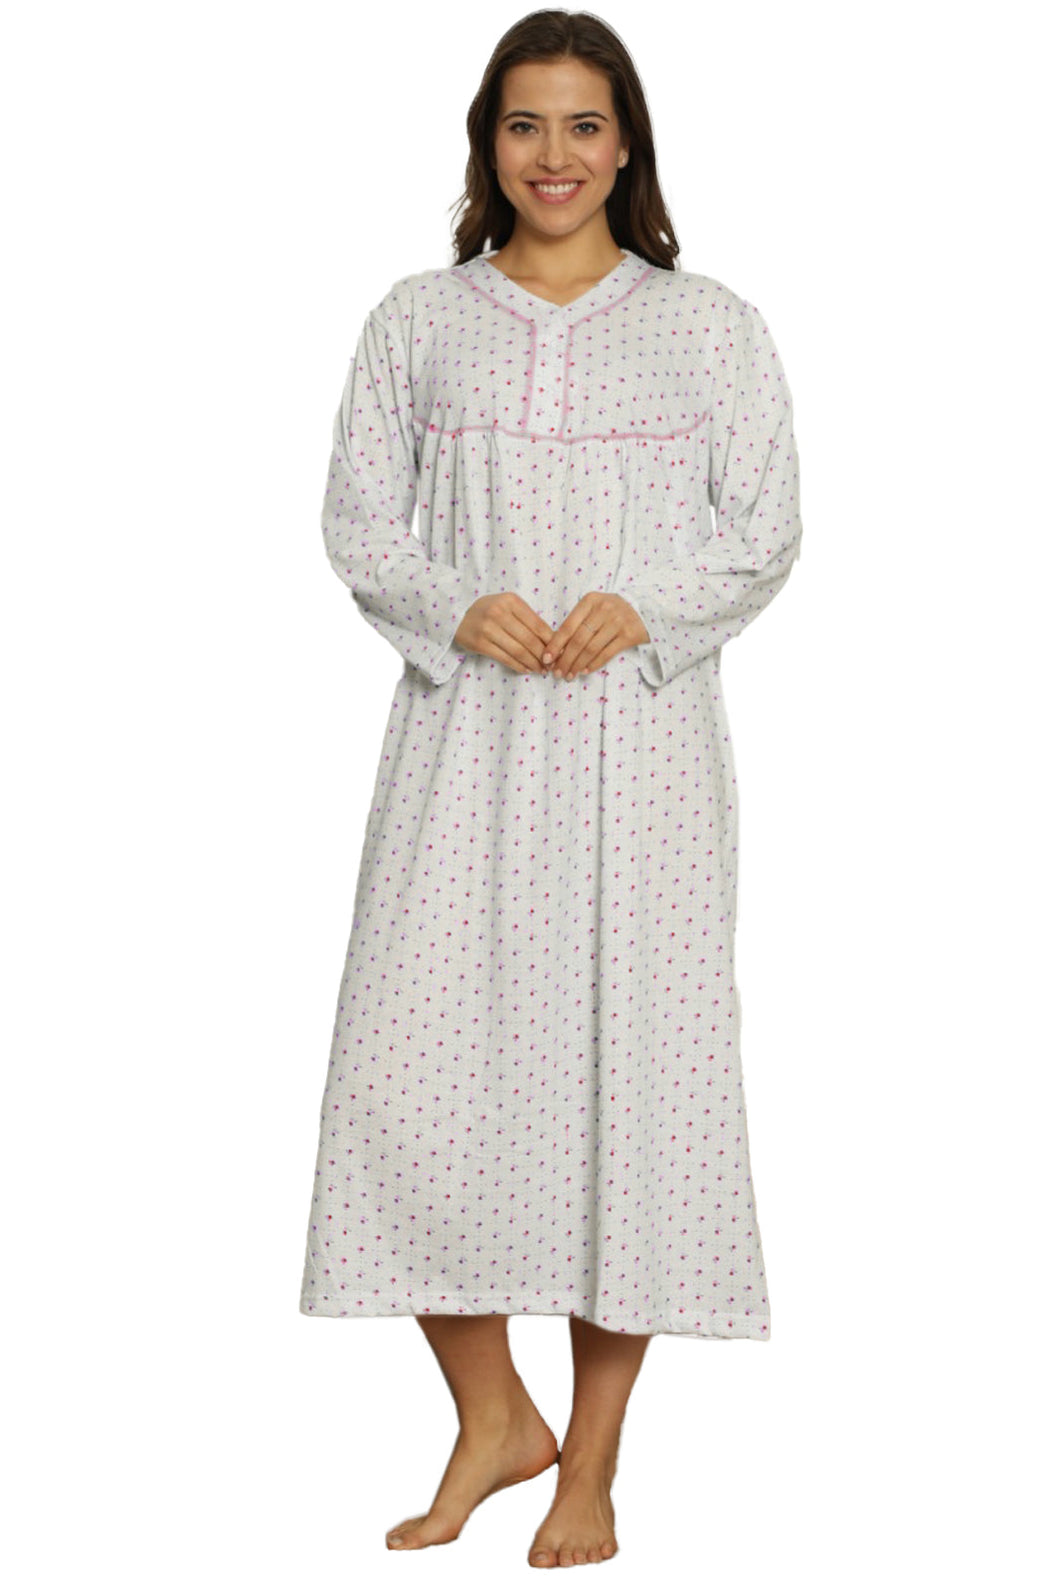 Trifolium Women's Comfy Nightdress 100% Cotton Short/Long Sleeve Nightwear with Buttons